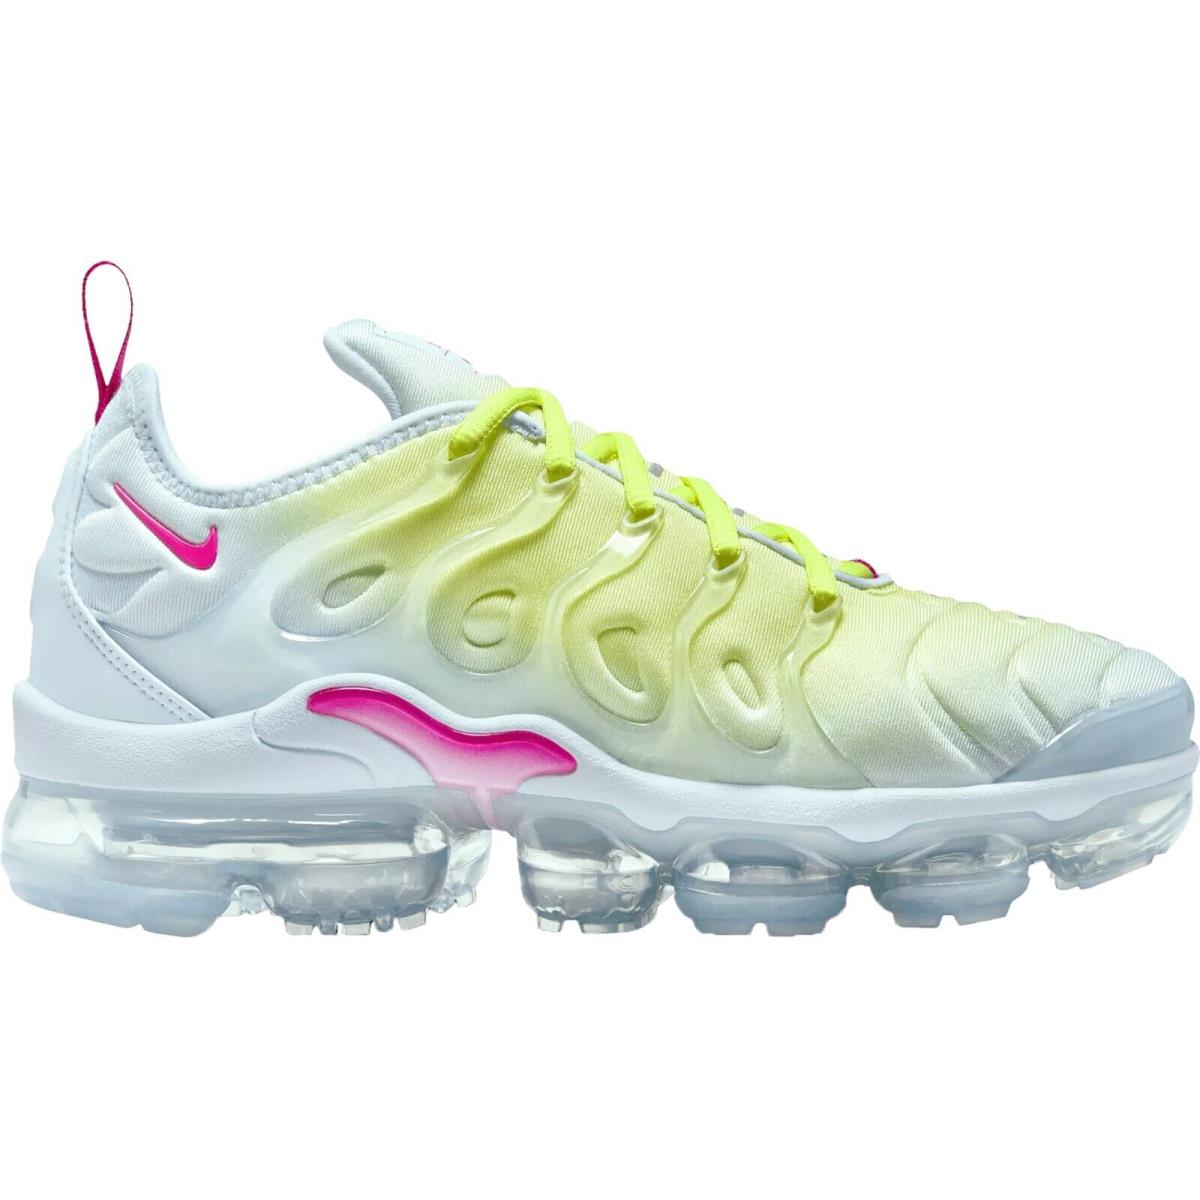 Nike Air Vapormax Plus Women`s Running Shoes All Colors US Sizes 6-11 Blue Tint/Fireberry/Light Lemon Twist